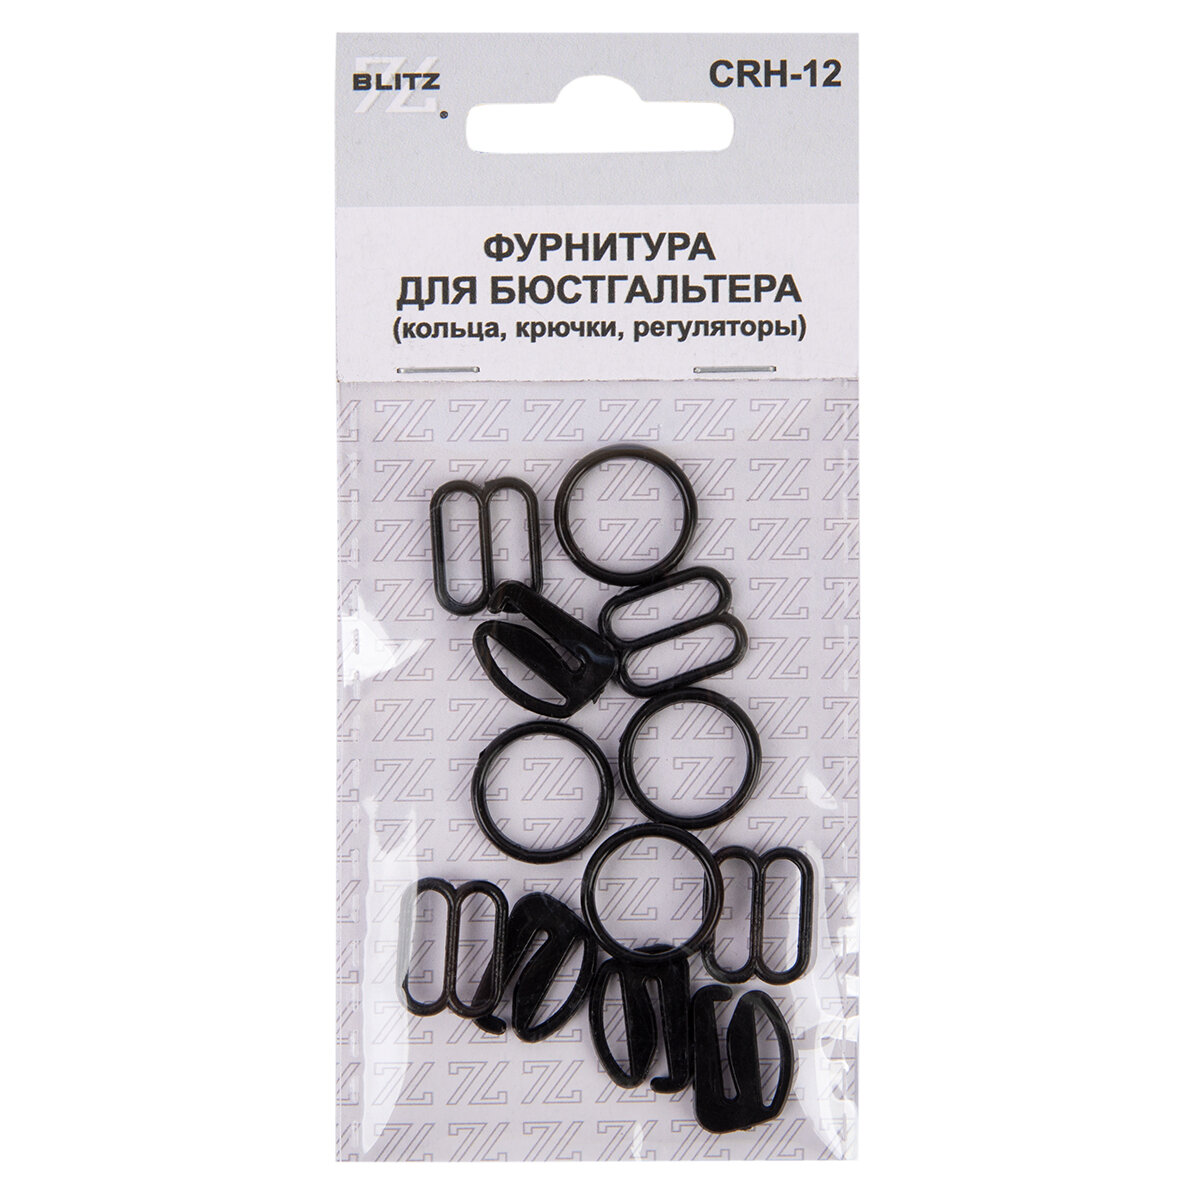 BLITZ CRH-12 набор фурнитуры пластик 12 мм 12 шт 02 черный